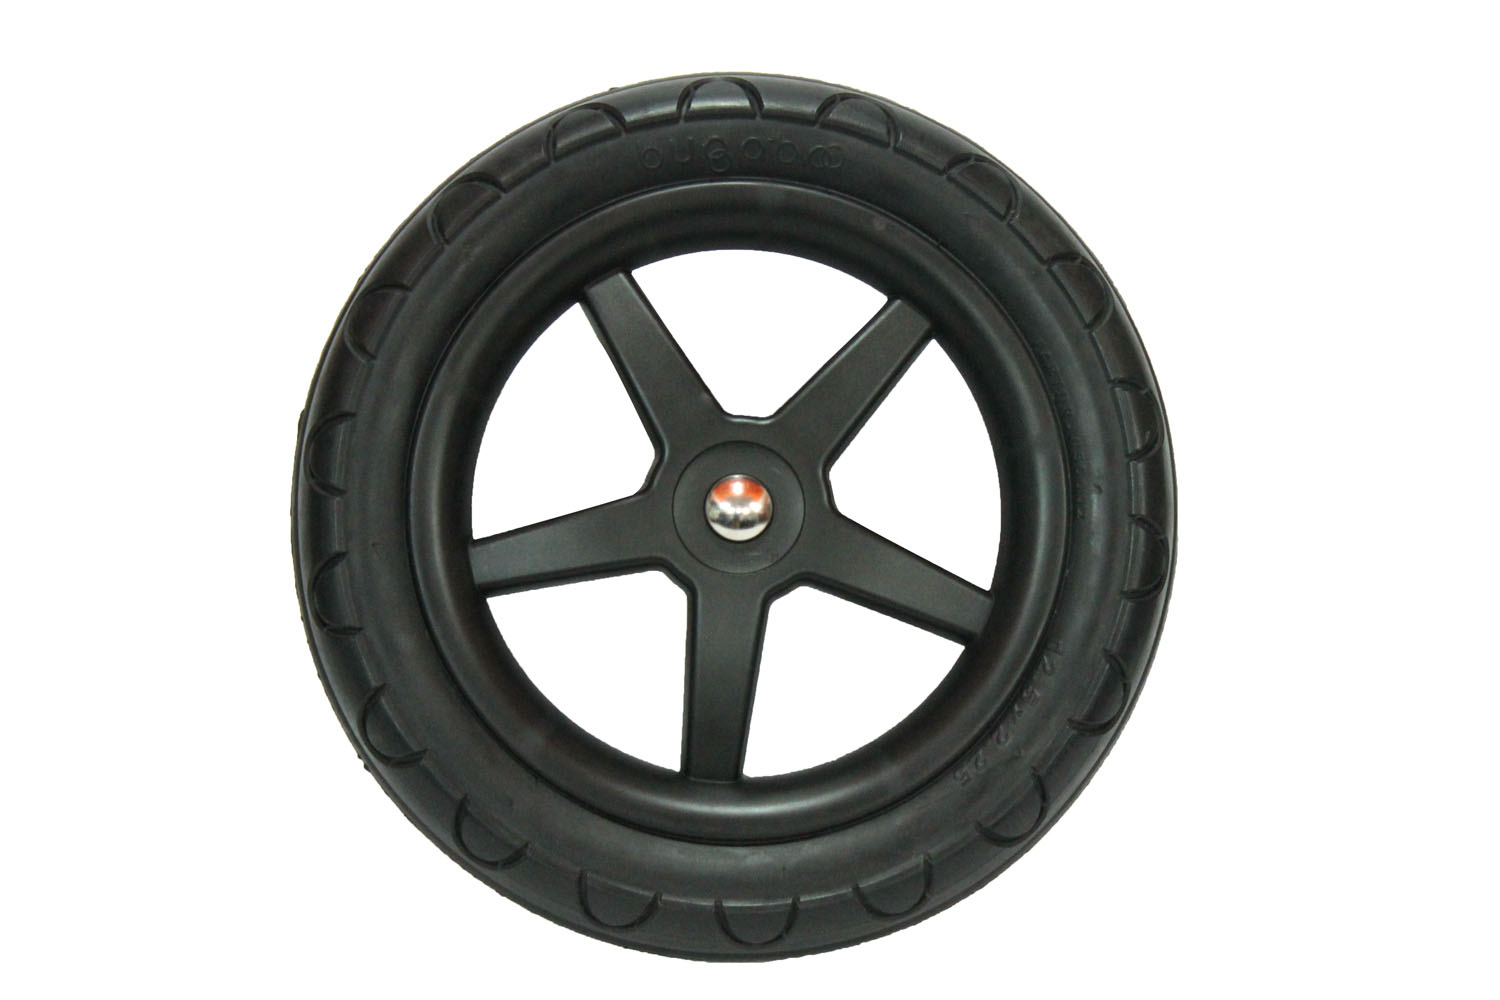 China Polyurethane stroller rubber tire;pu foam rubber wheel;wheelchair caster wheel;solid tire for stroller